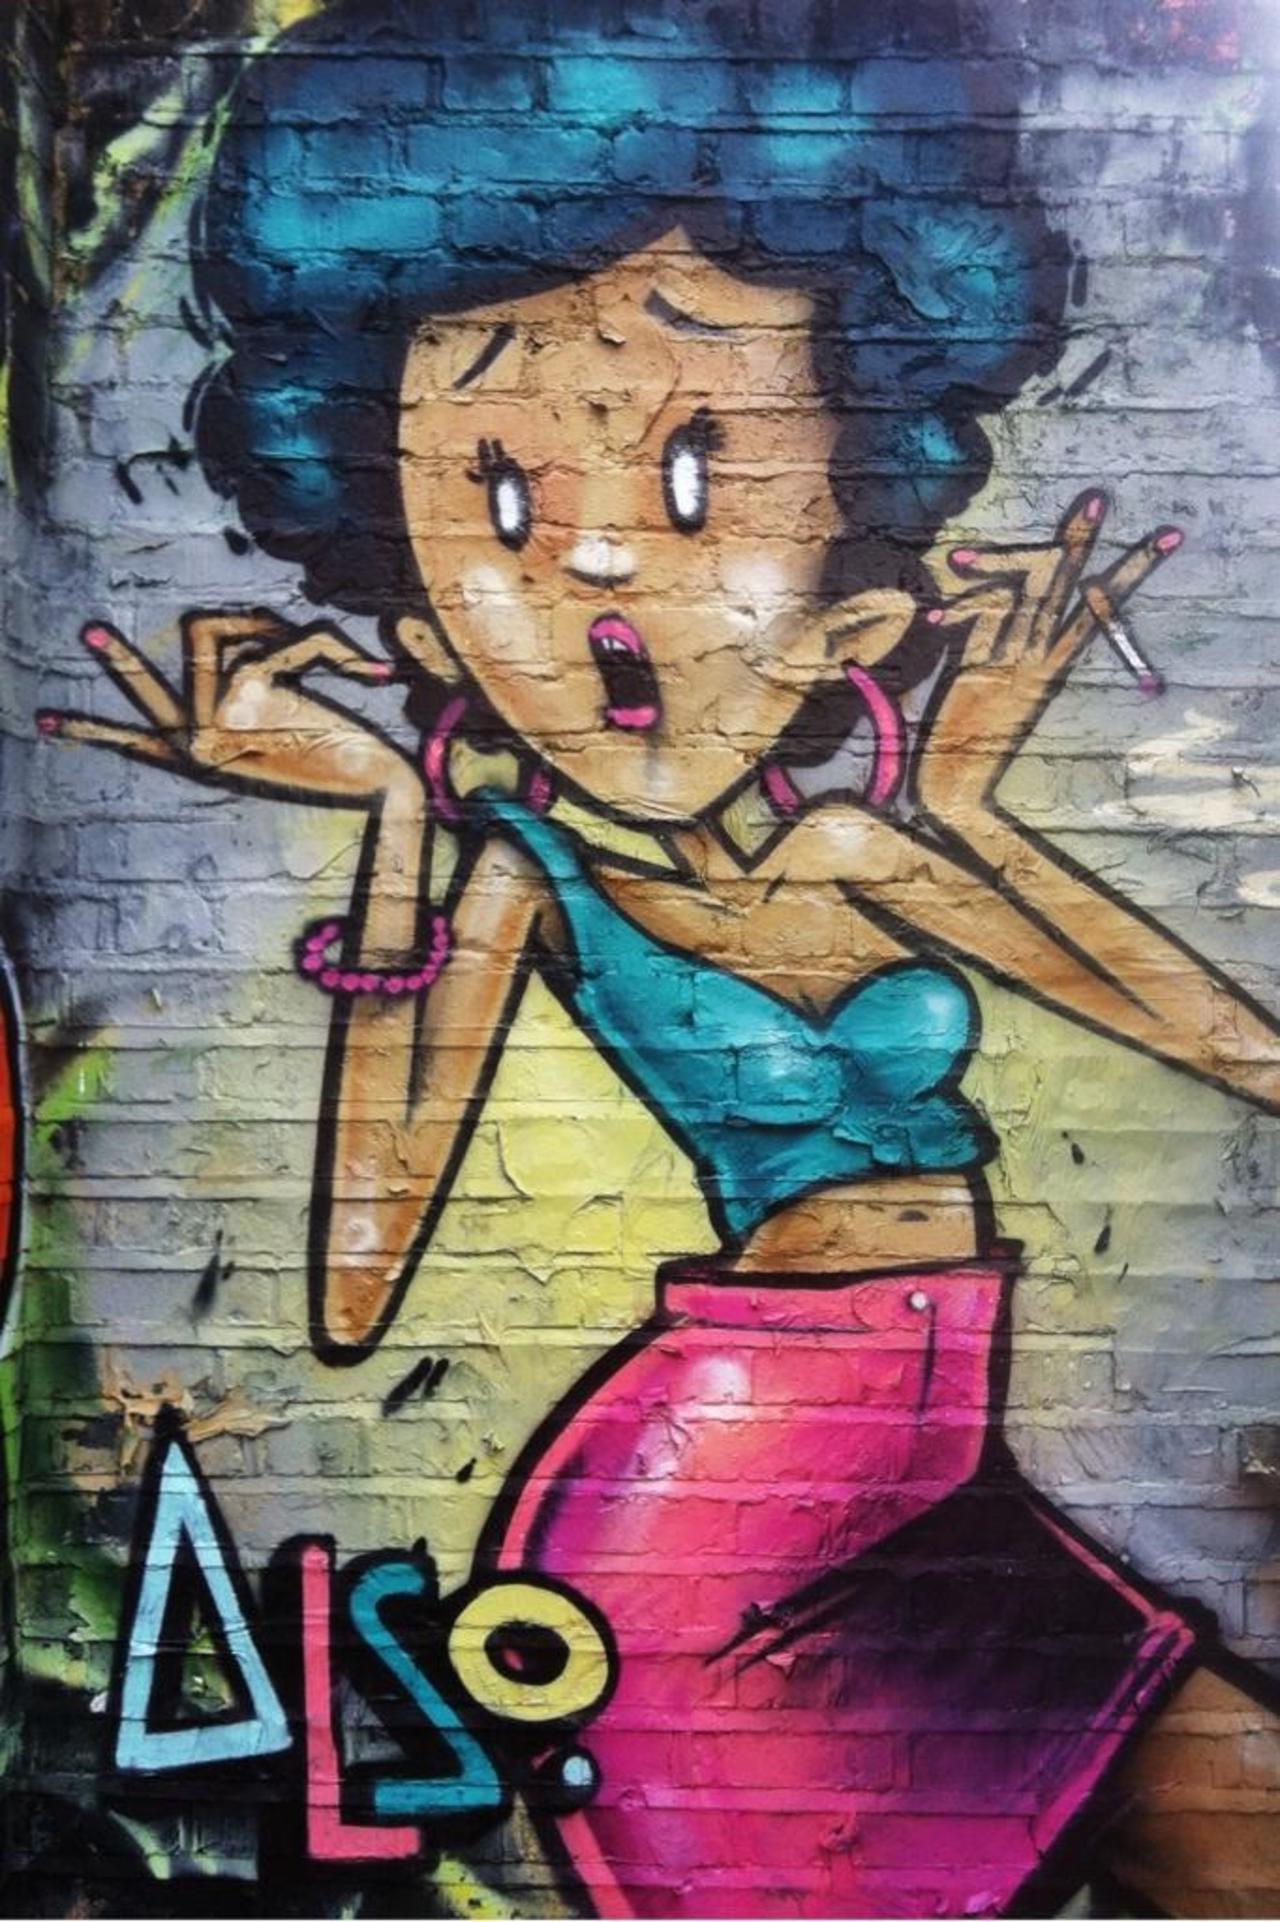 “@BrickLaneArt: ALSO on Pedley Street 

#graffiti #art #streetart @ShoreditchGraf @ishootstreetart http://t.co/qIBPlYA7zC